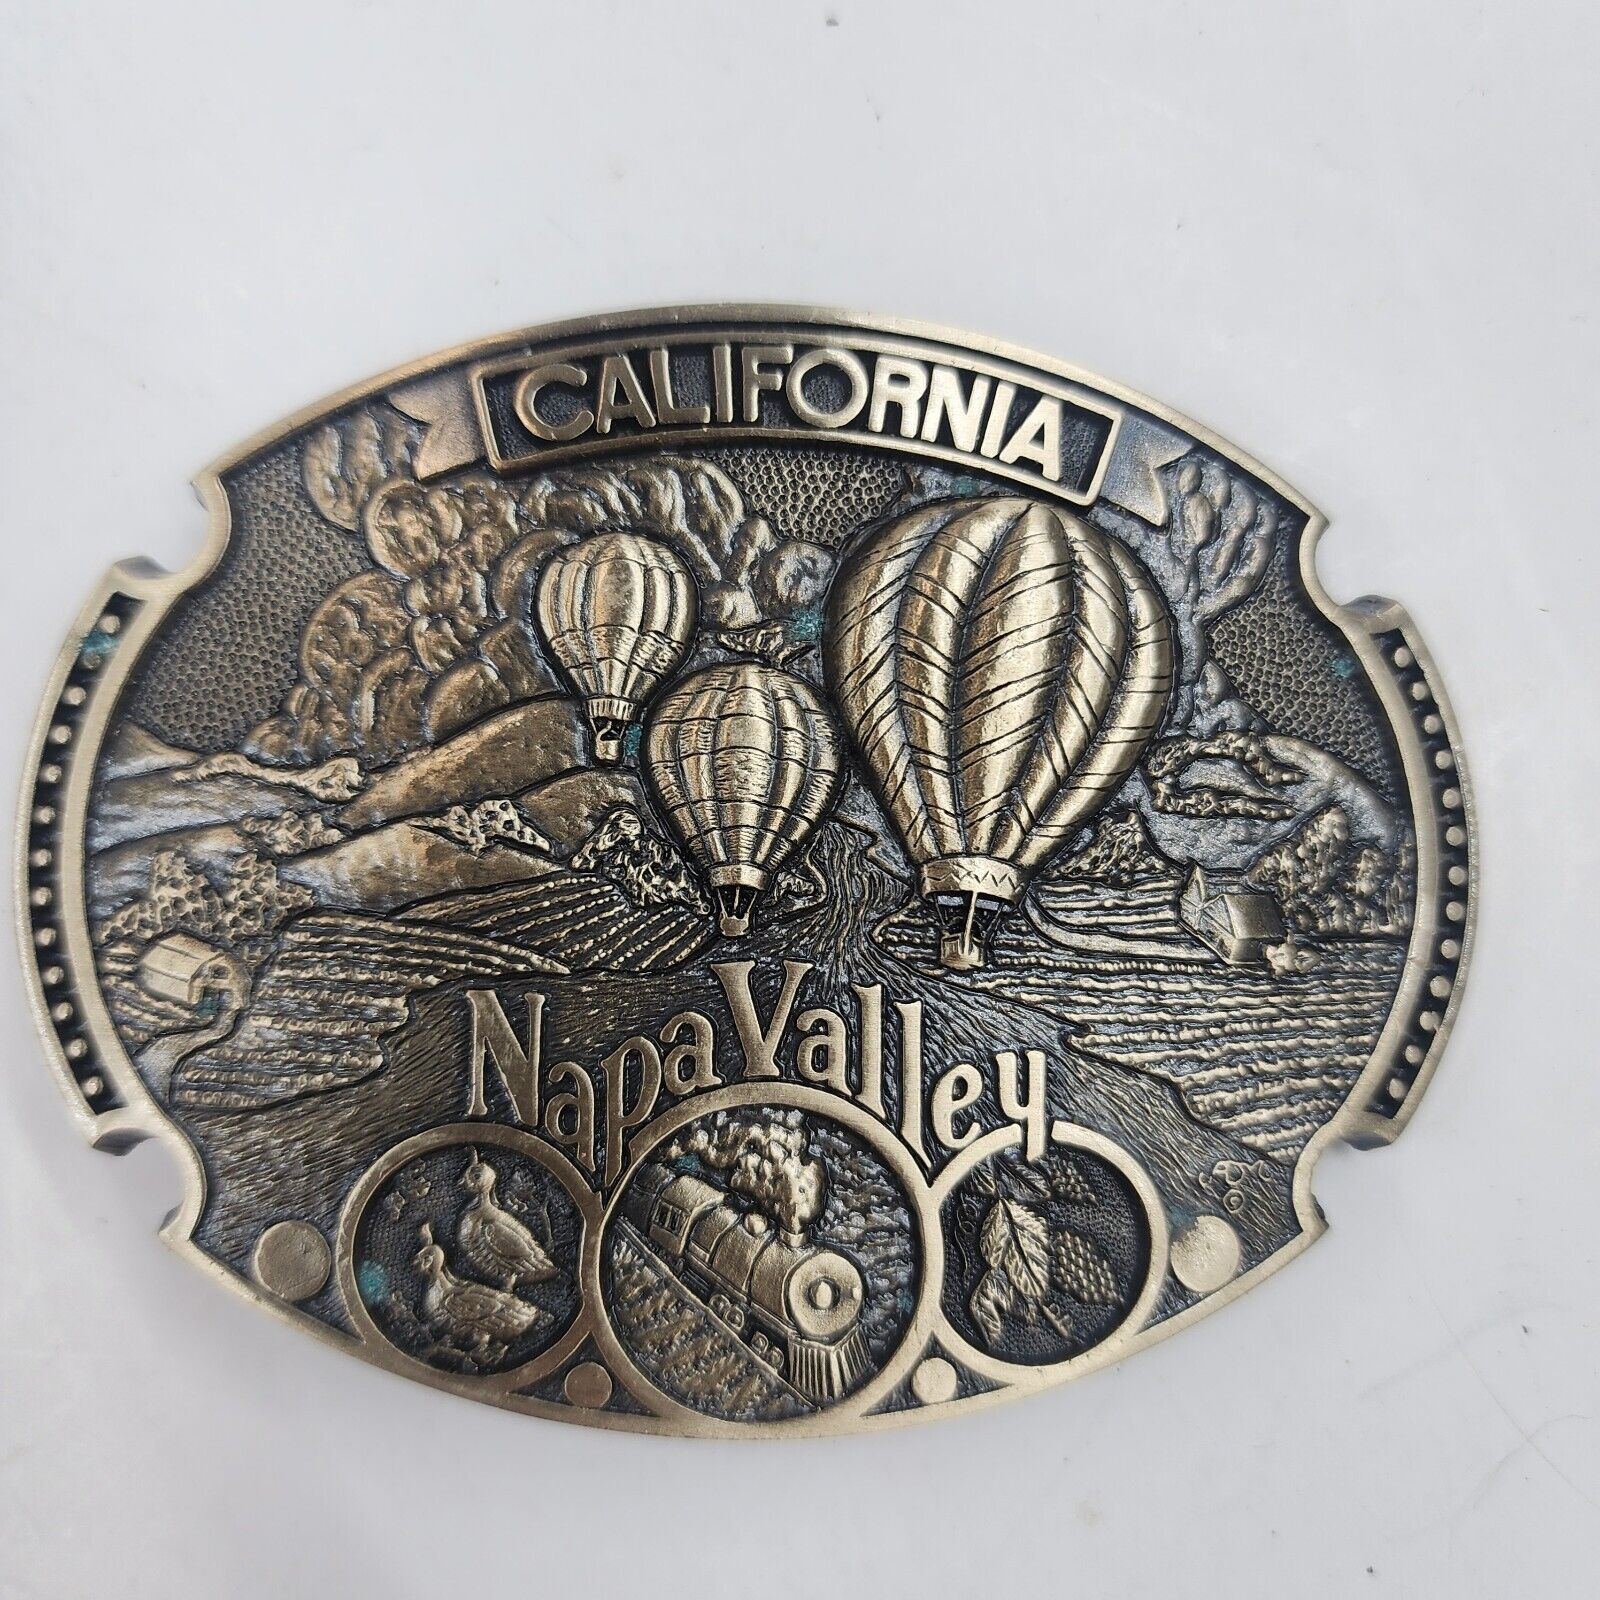 Napa Valley CA Solid Brass Vintage Belt Buckle Limited Edition Award Design